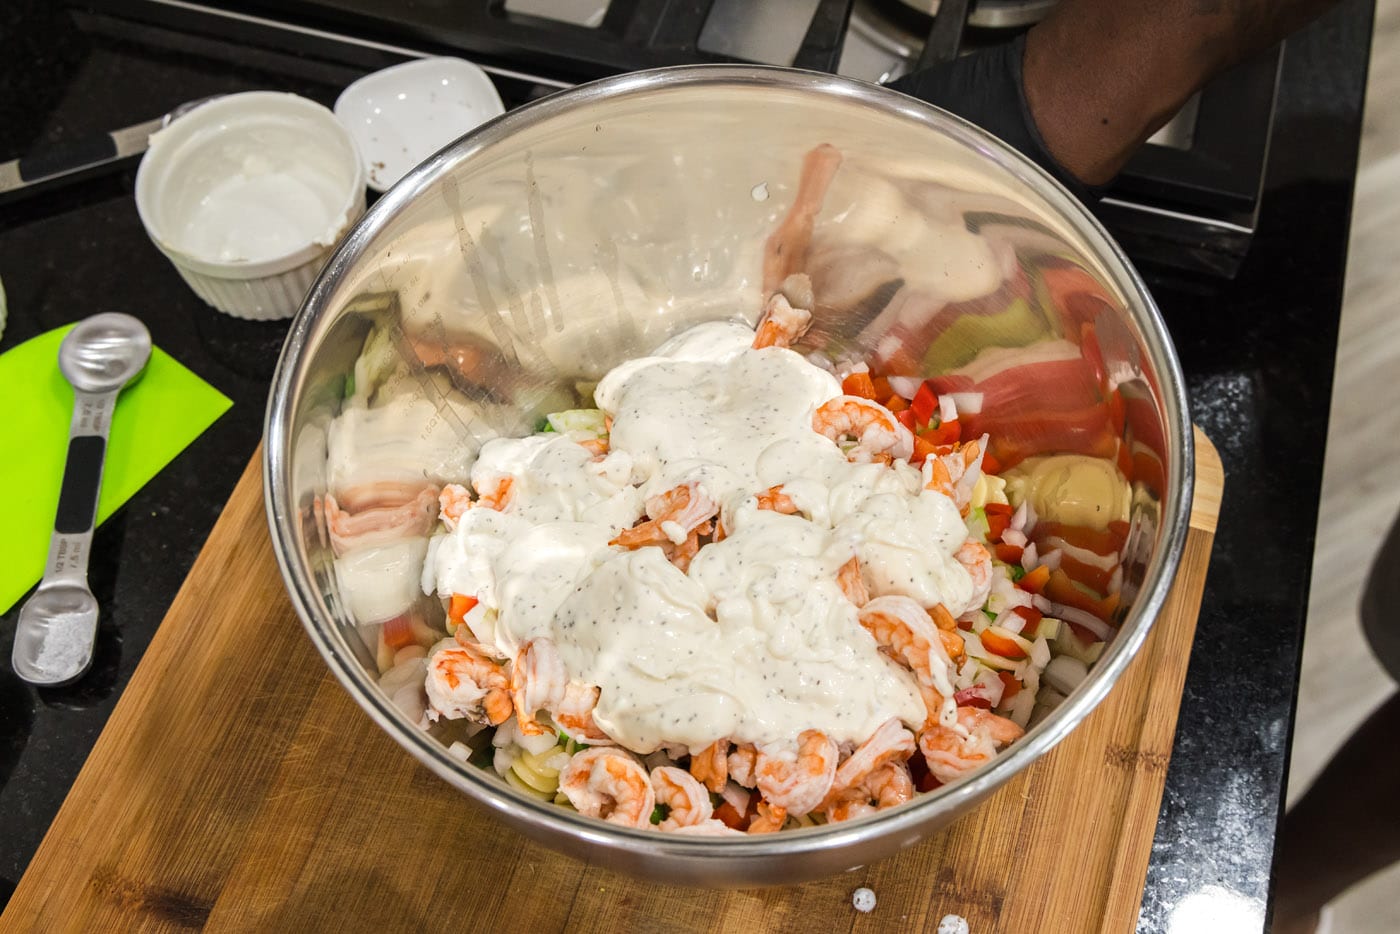 shrimp salad dressing added to pasta, vegetables, and cooked shrimp